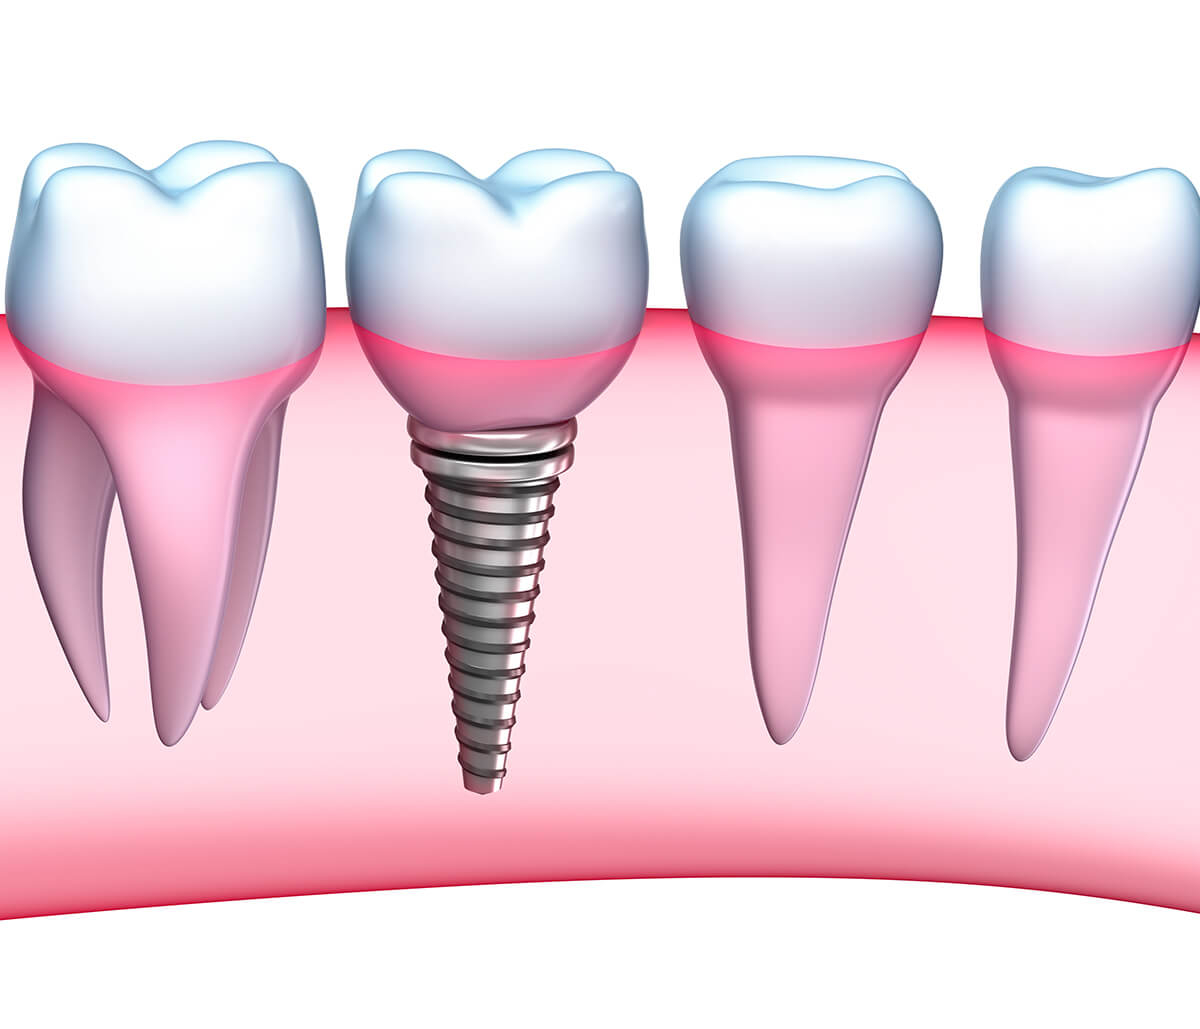 Implants for Teeth in Alpharetta GA Area